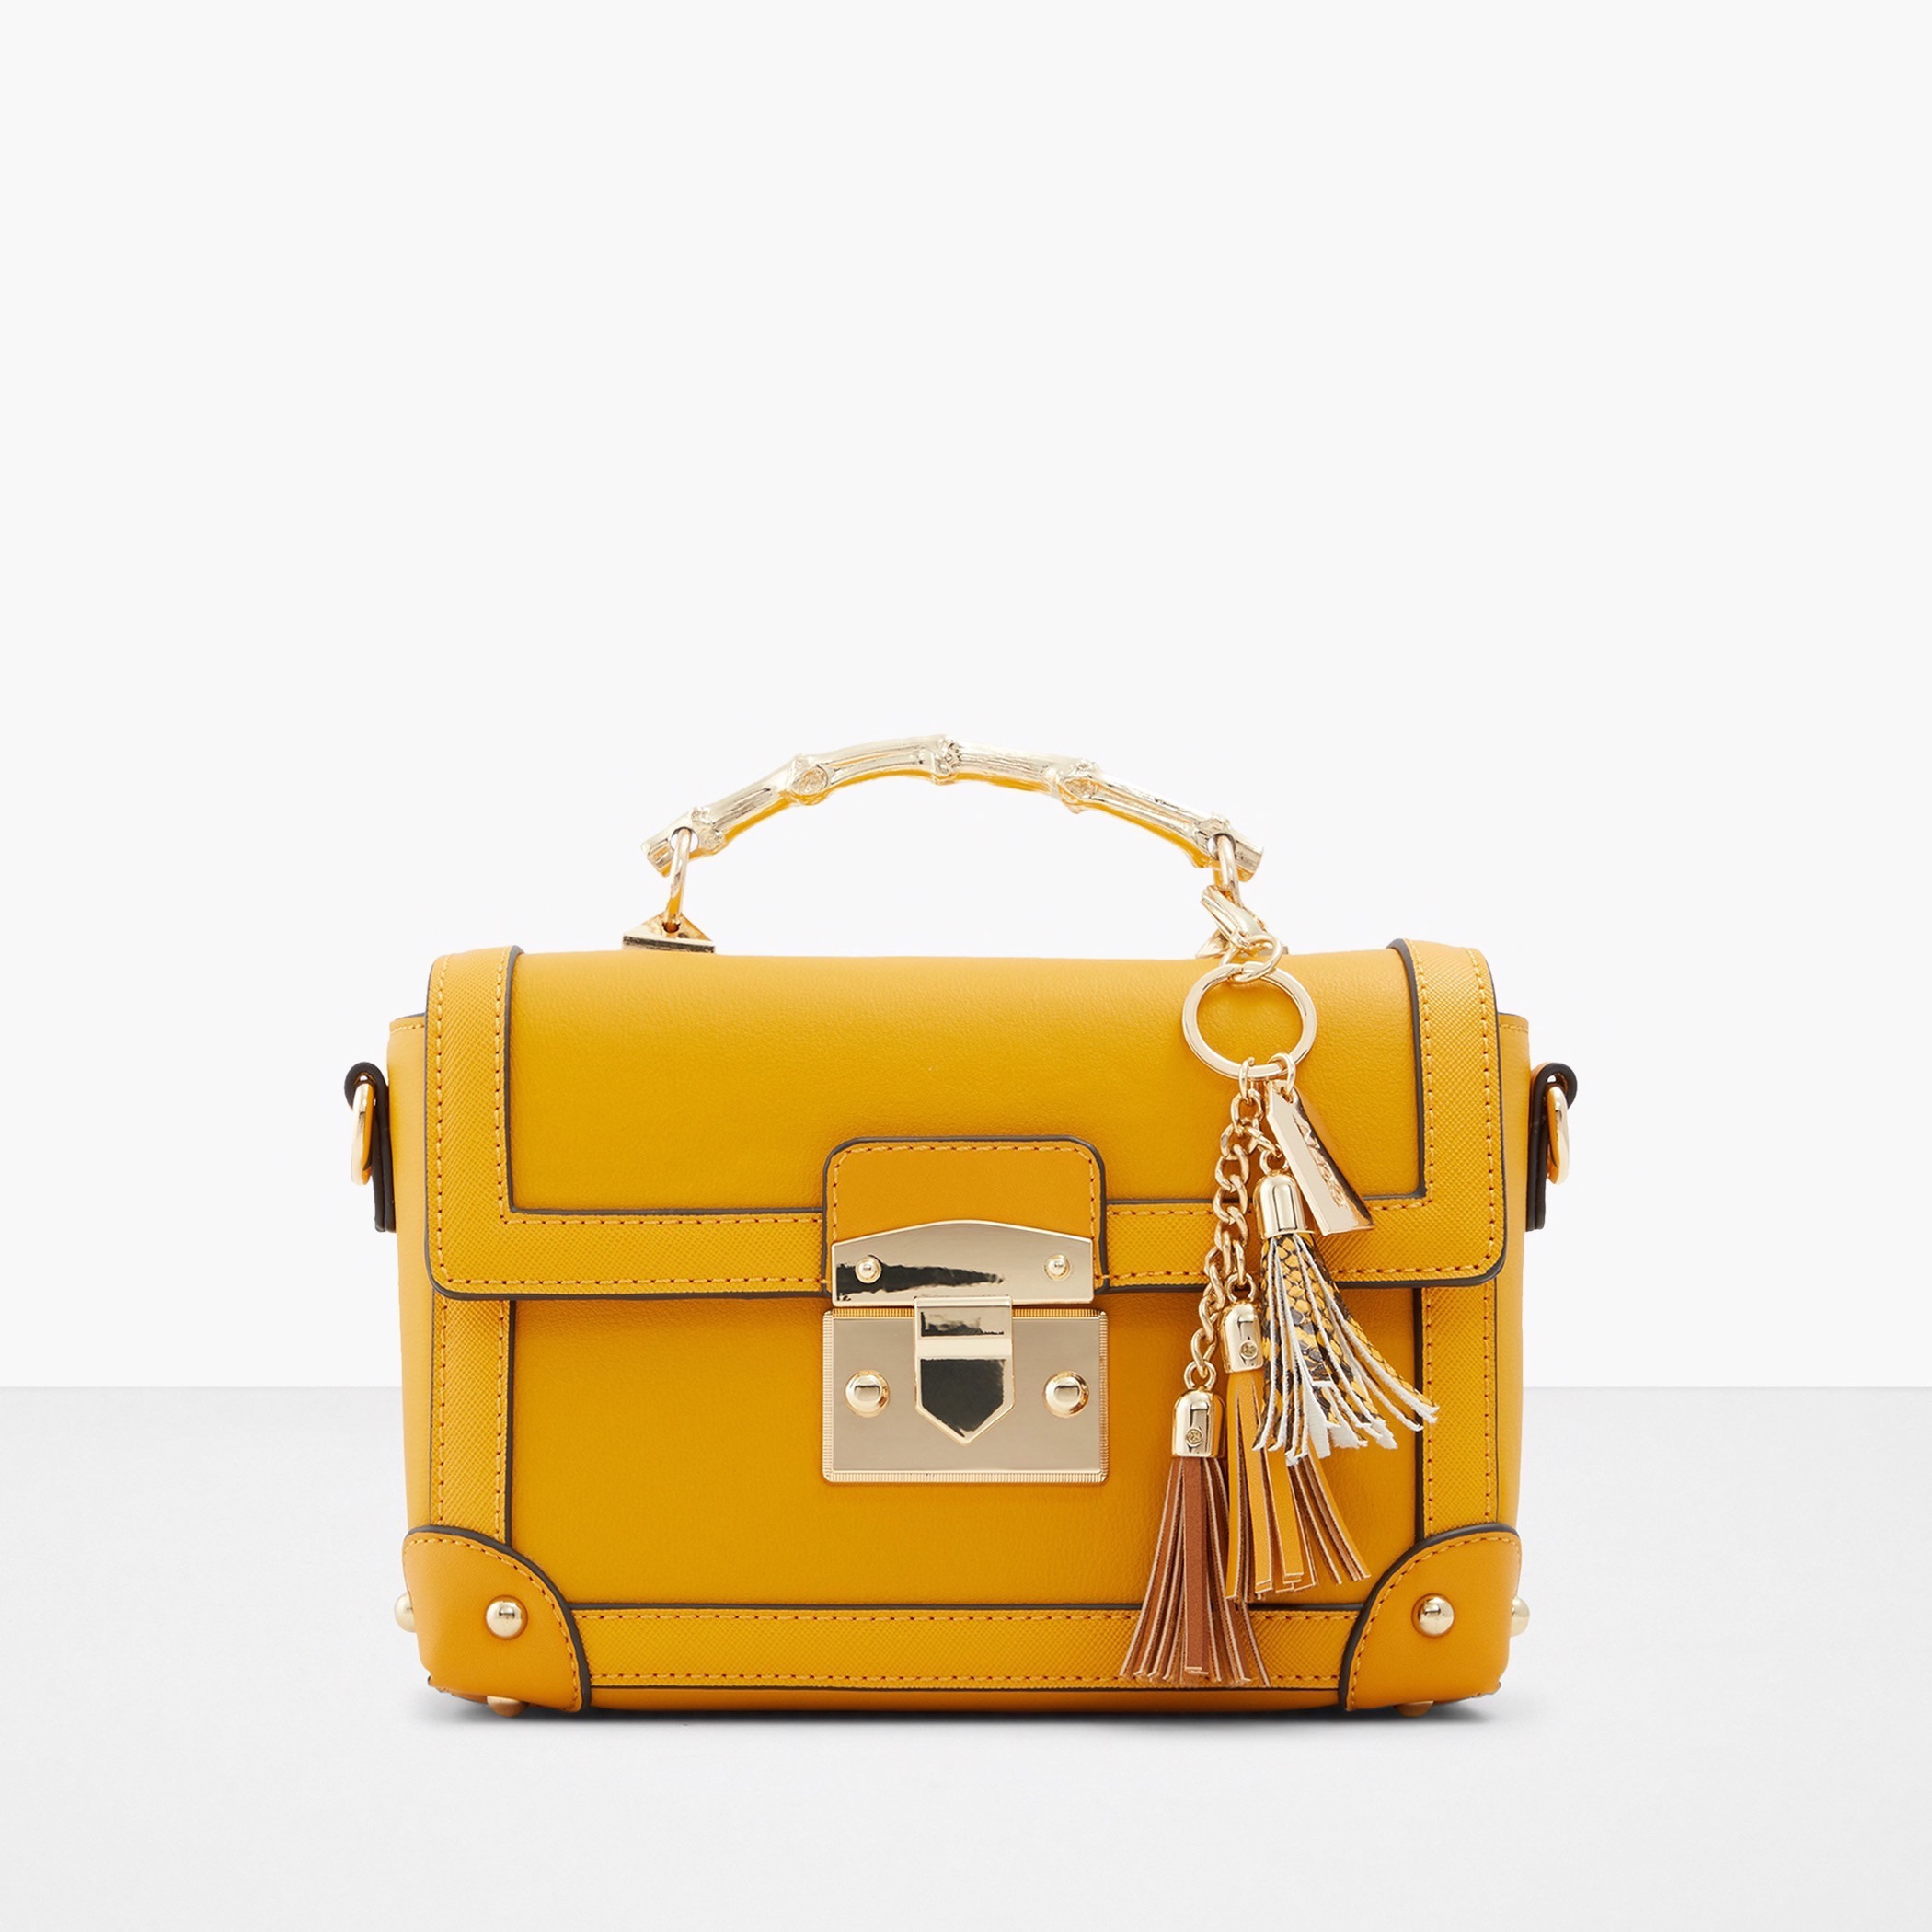 Buy Aldo GLENDAA961 Multi-Color Handbag Online